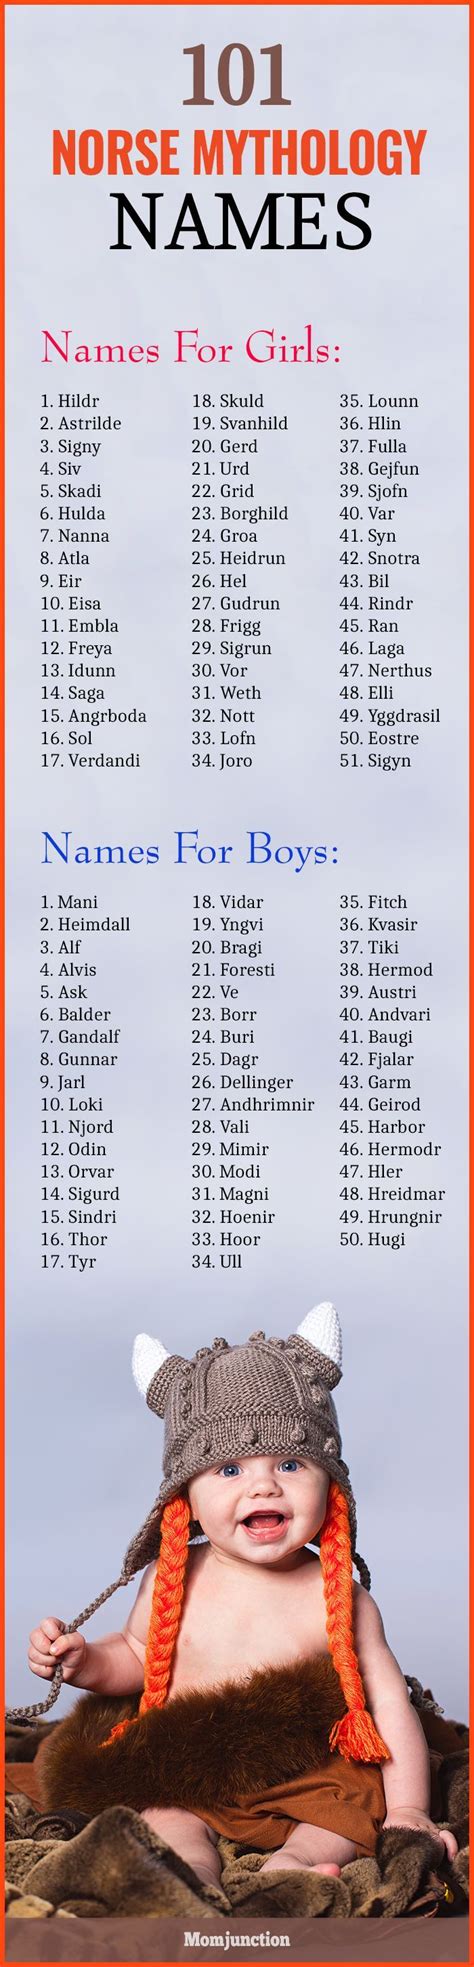 101 Most Popular Norse Mythology Names Character Names Norse